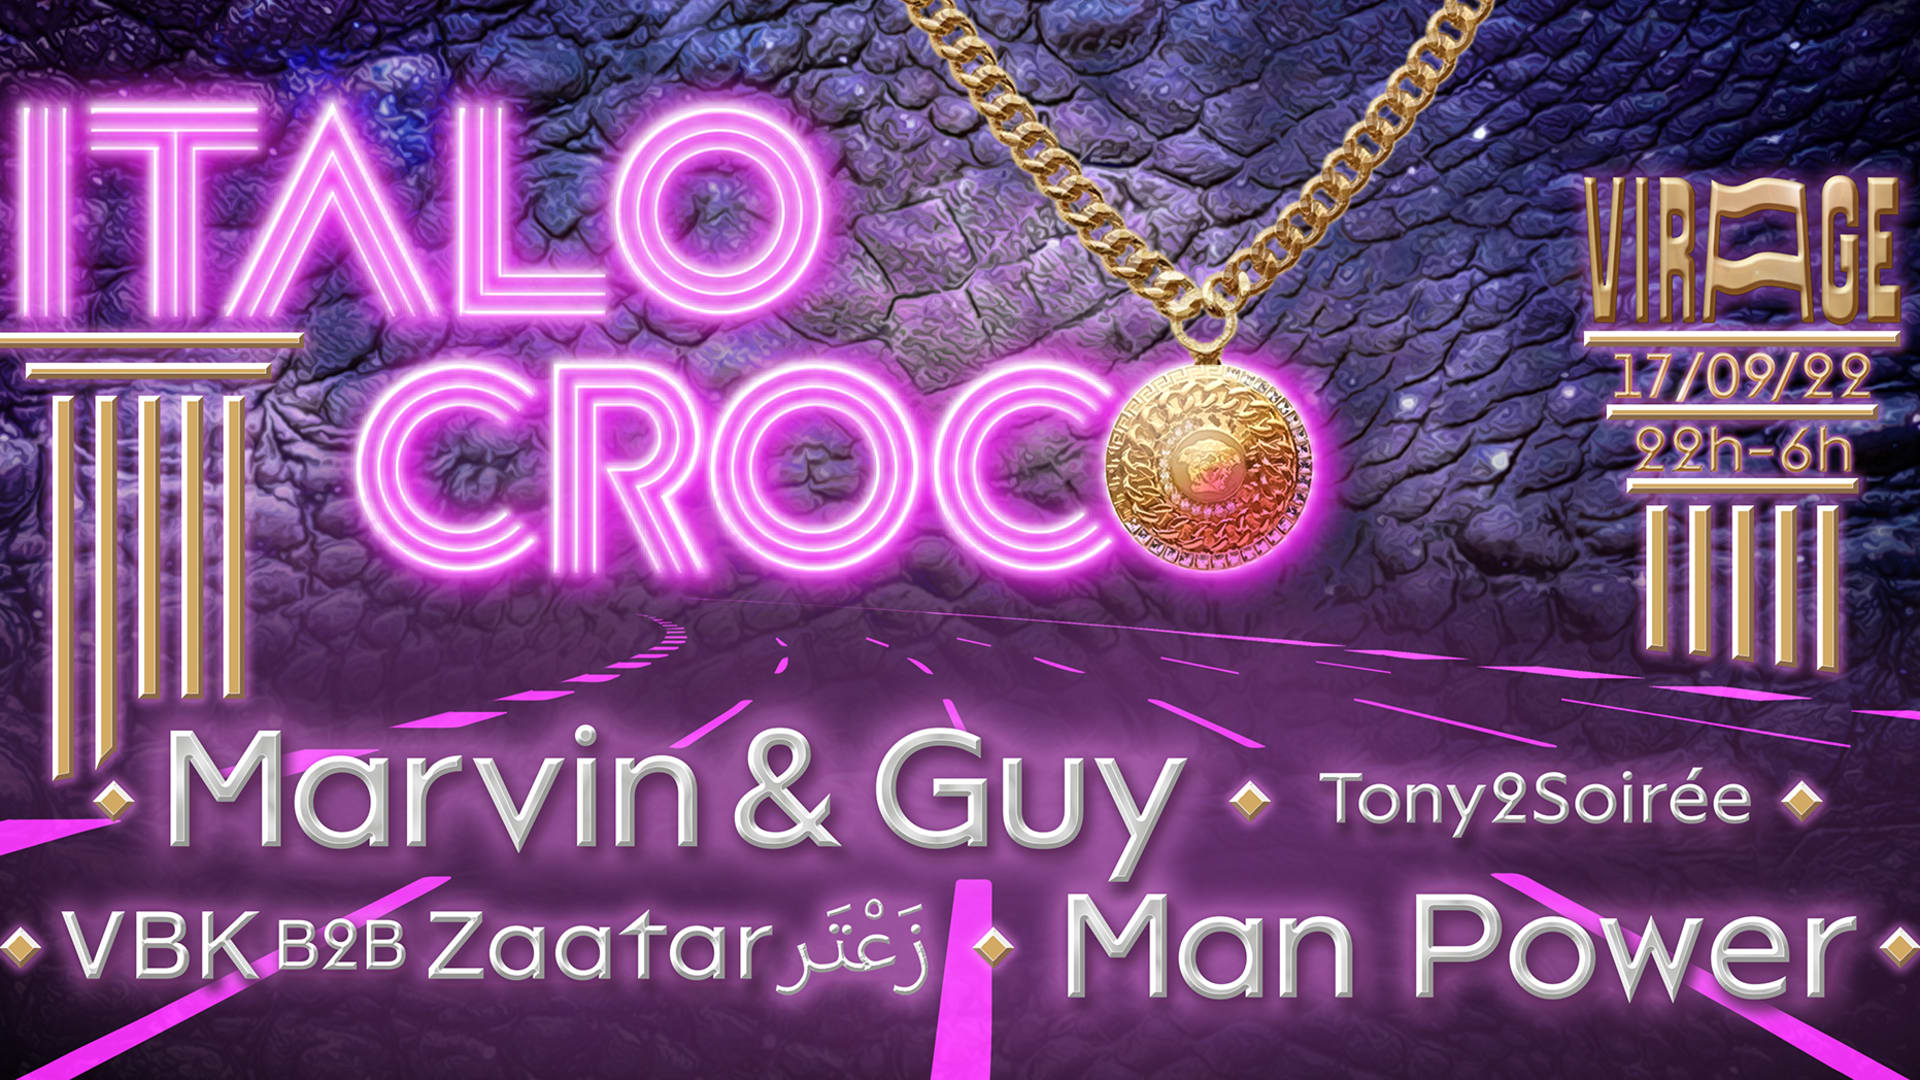 ItaloCroco| Marvin & Guy, Man Power, VBK & Zaatar زَعْتَر, Tony2Soirée